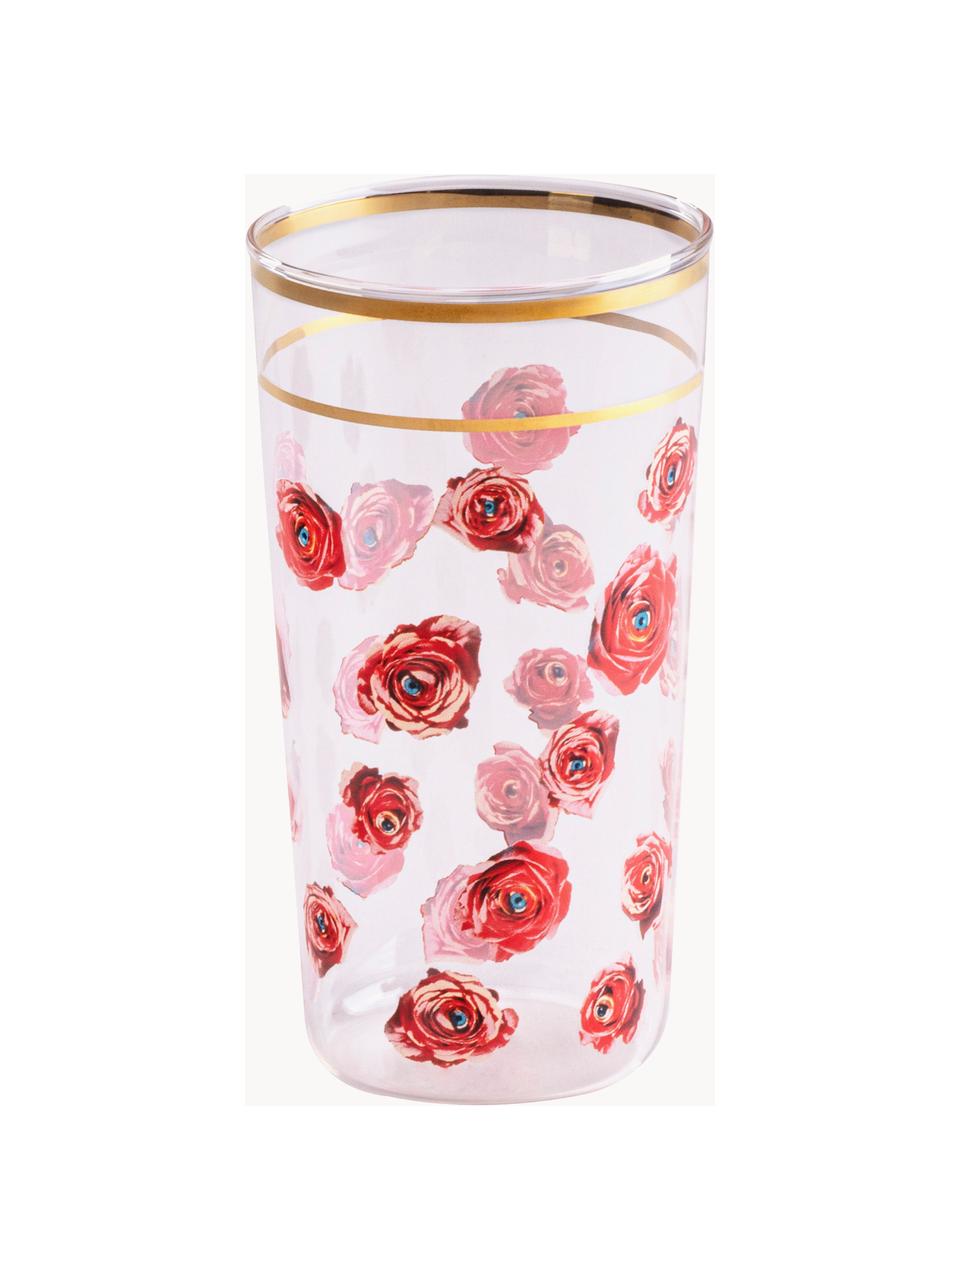 Waterglas Roses, Decoratie: goudkleurig, Roses, Ø 7 x H 13 cm, 370 ml